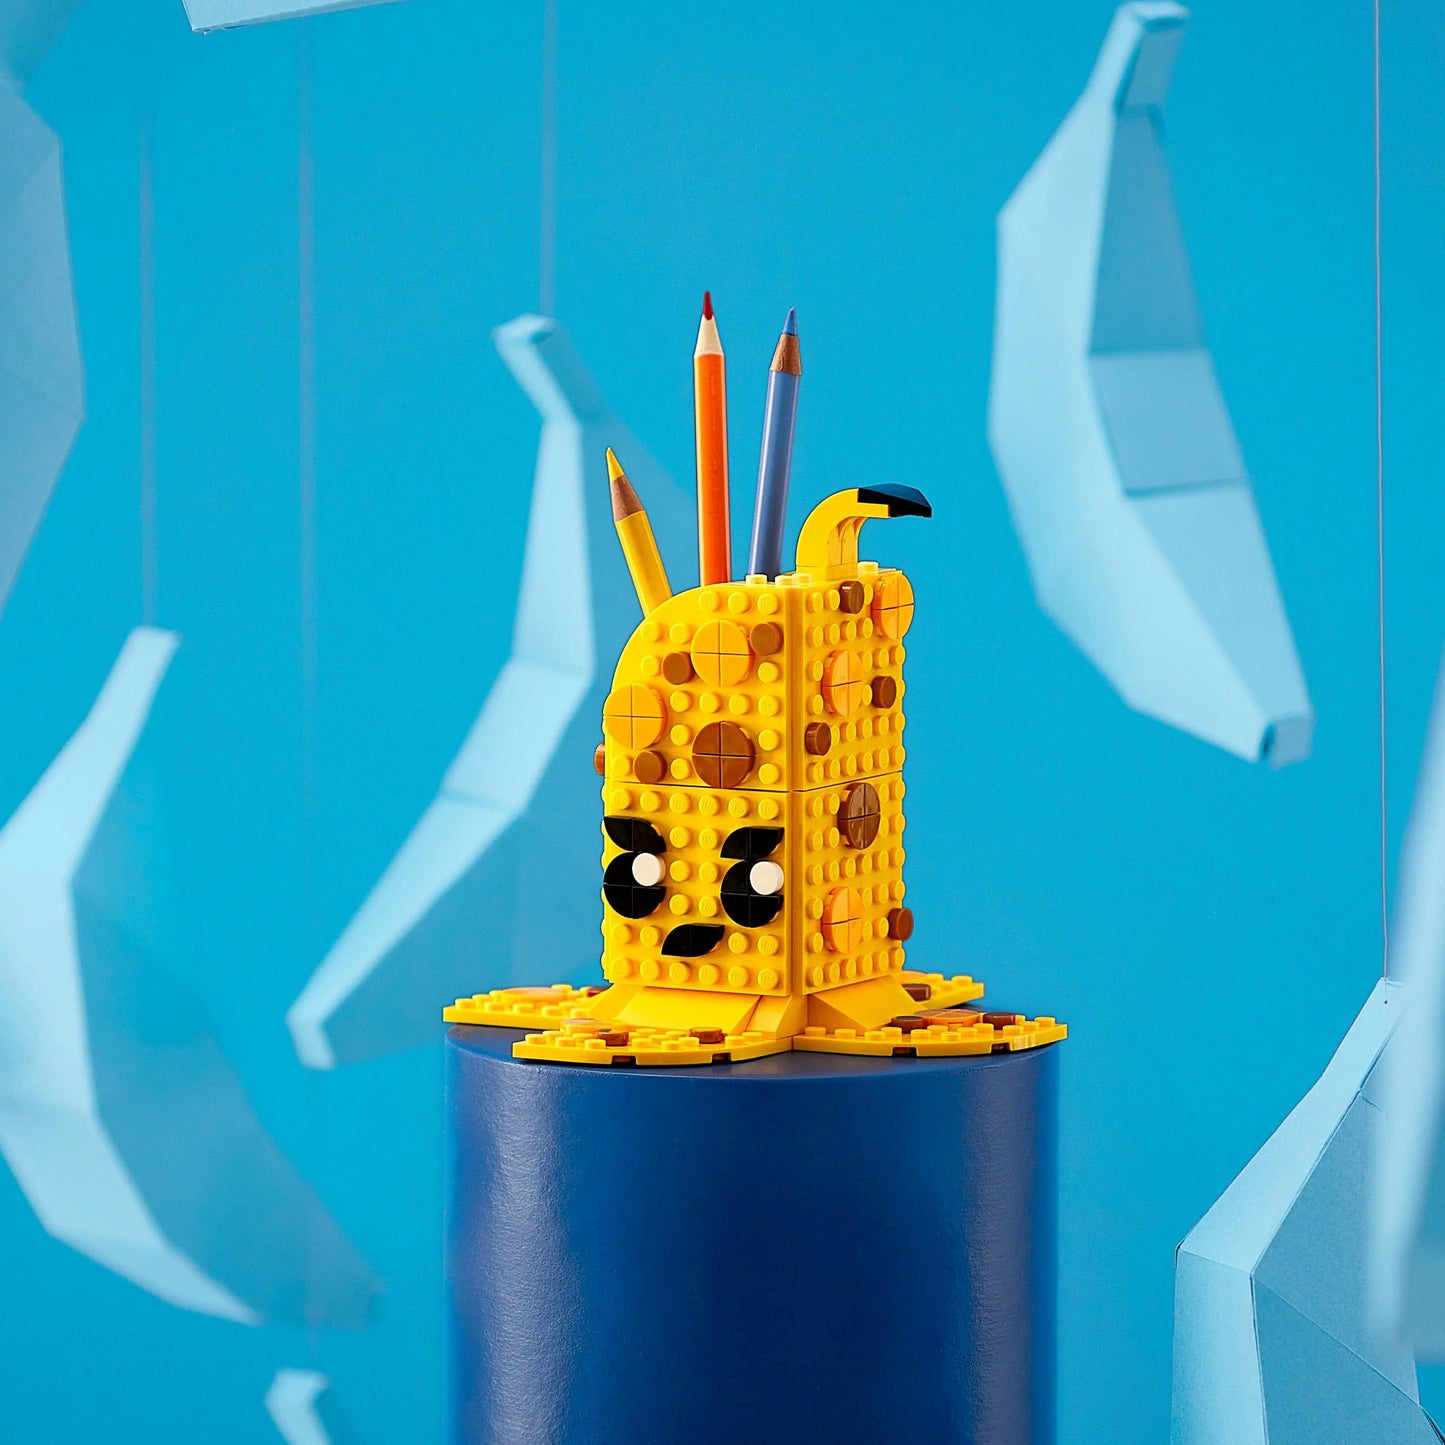 Funny Banana Pen Holder - LEGO Dots